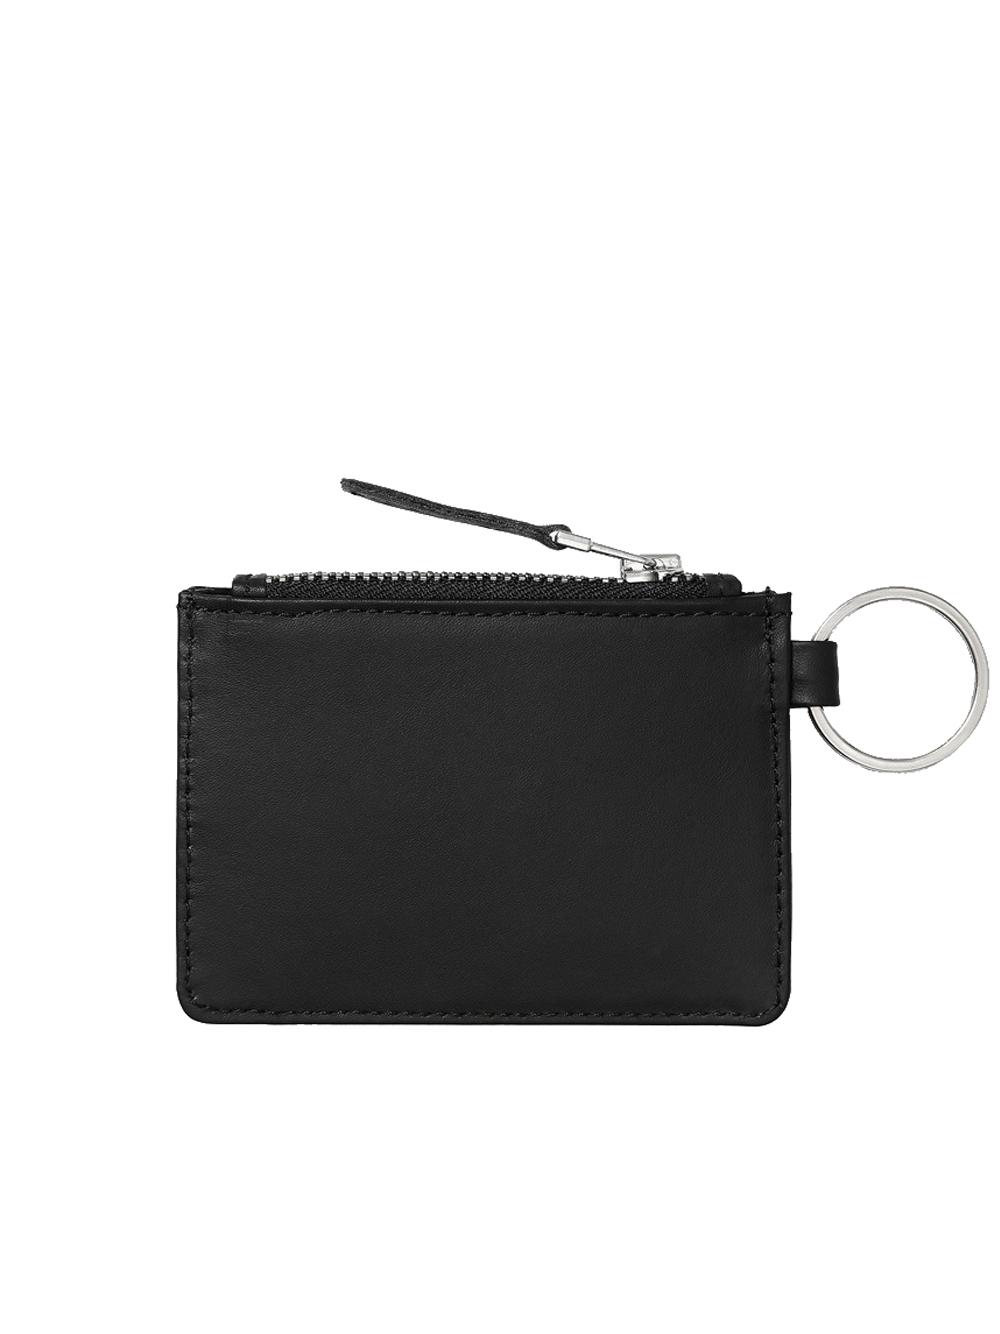 Carhartt WIP Haste Wallet - Black - One Size - Unisex